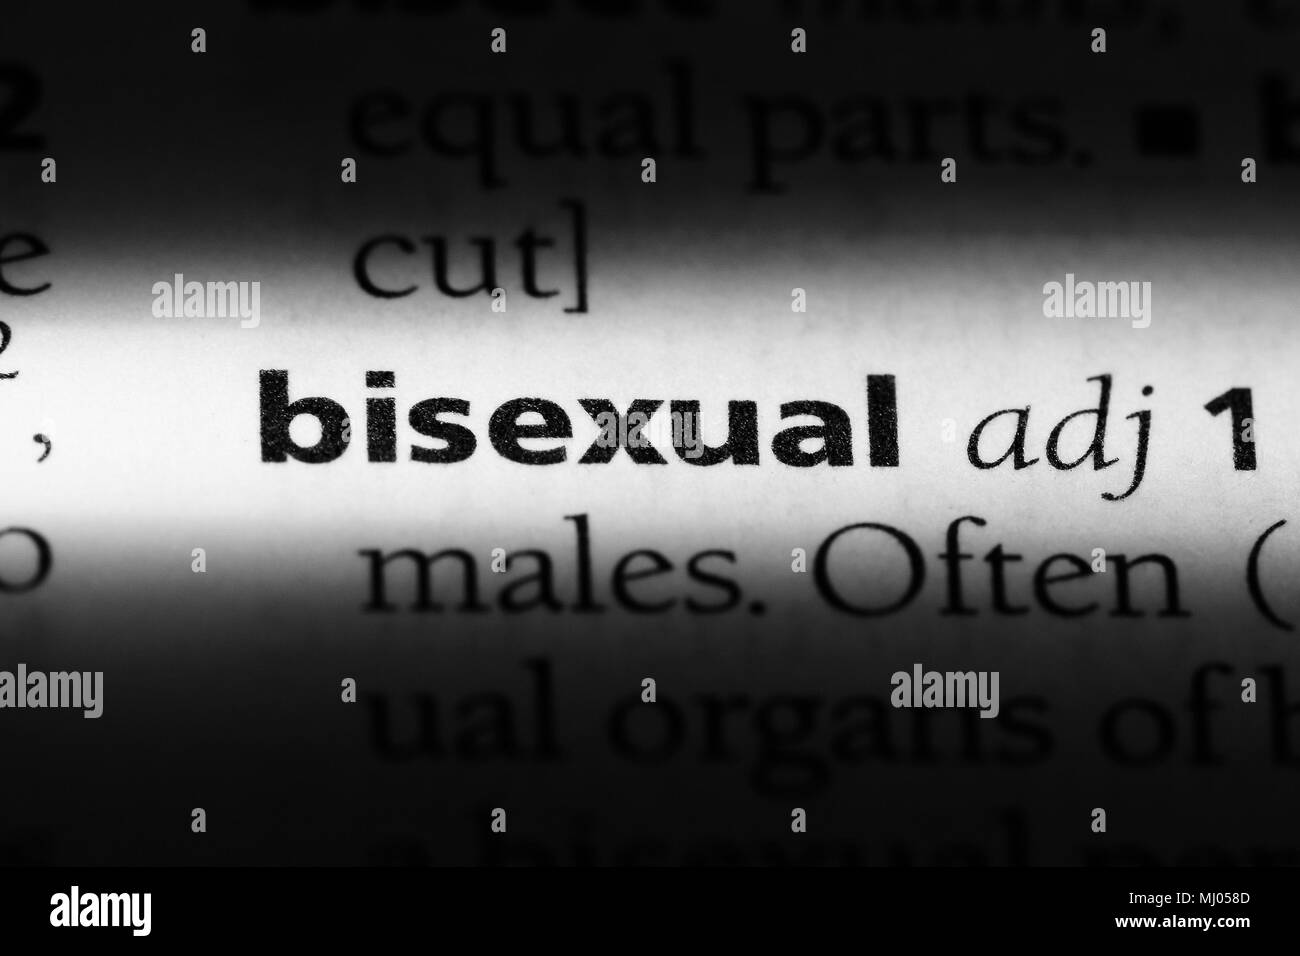 L word season 6 bisexual transvetsite